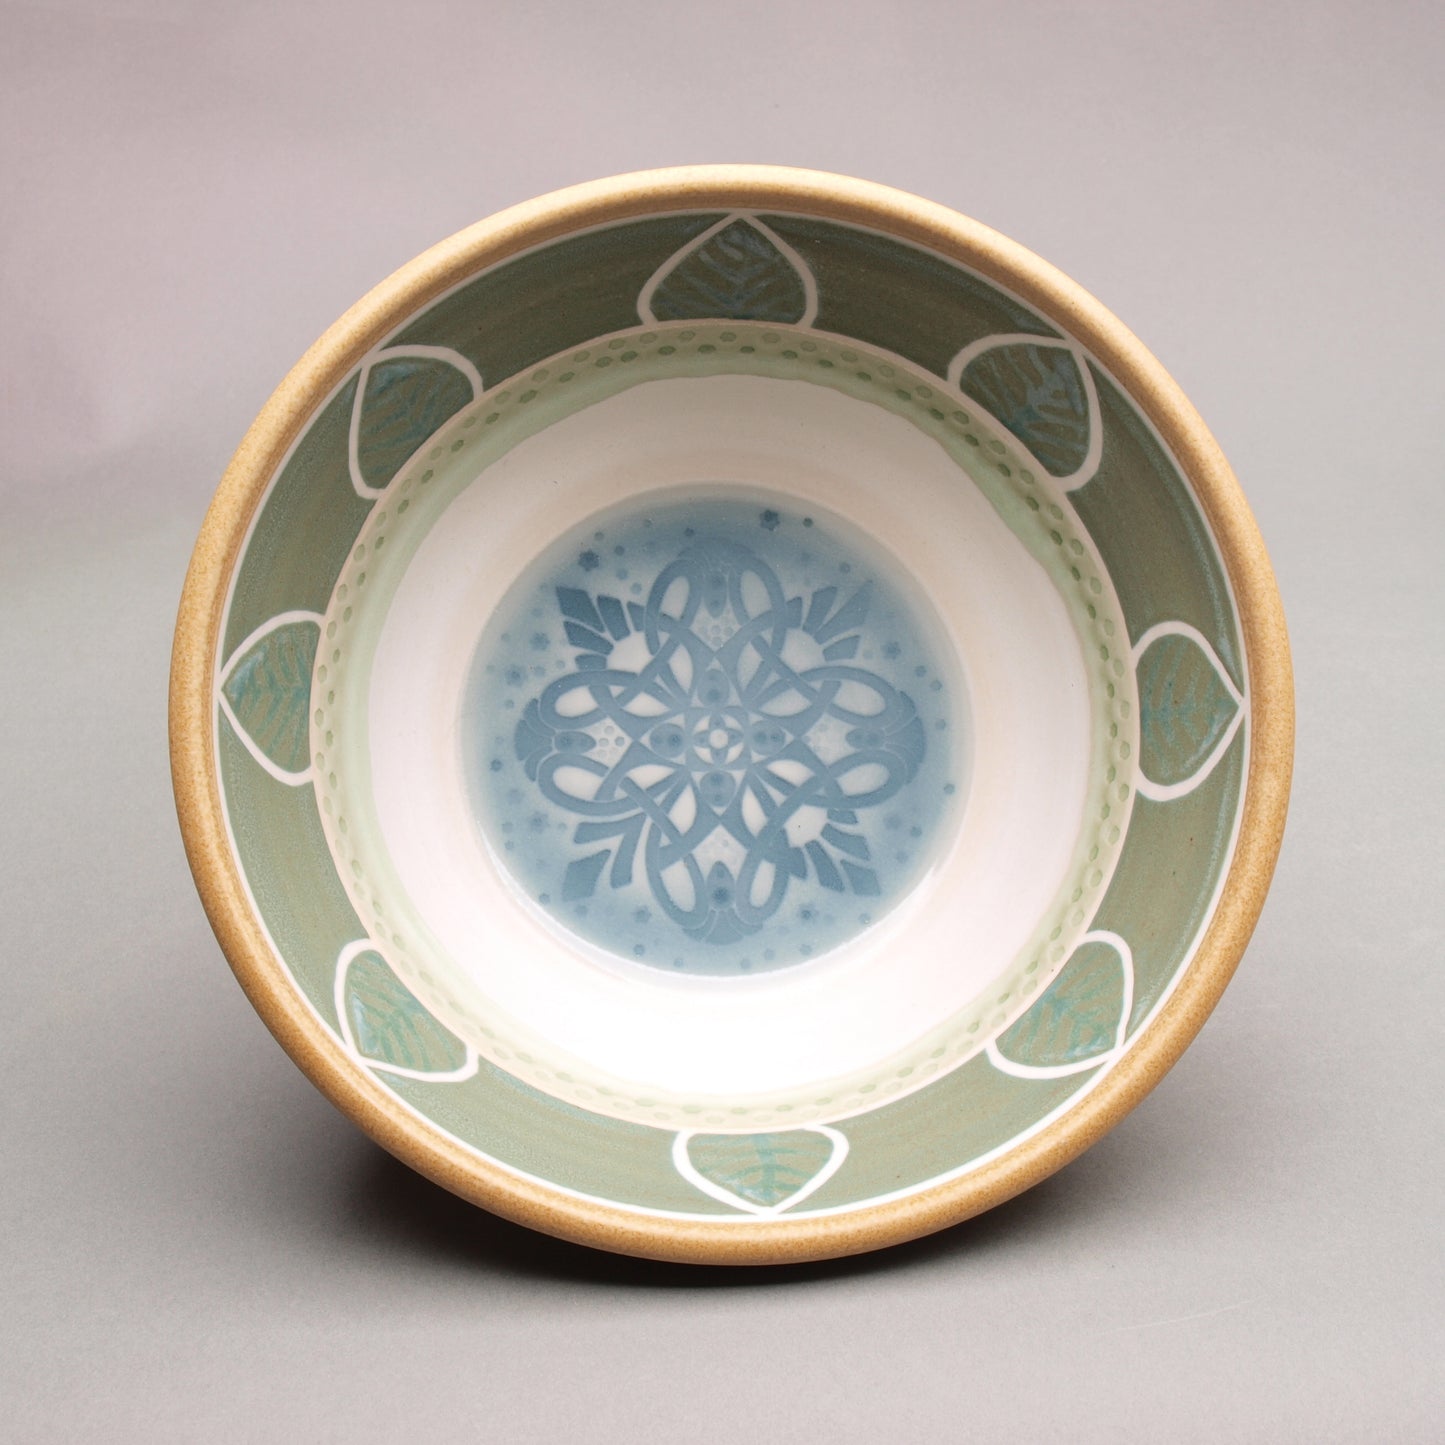 Elegant Porcelain Bowl with a celtic inspired clover imprint – Handcrafted Artistry